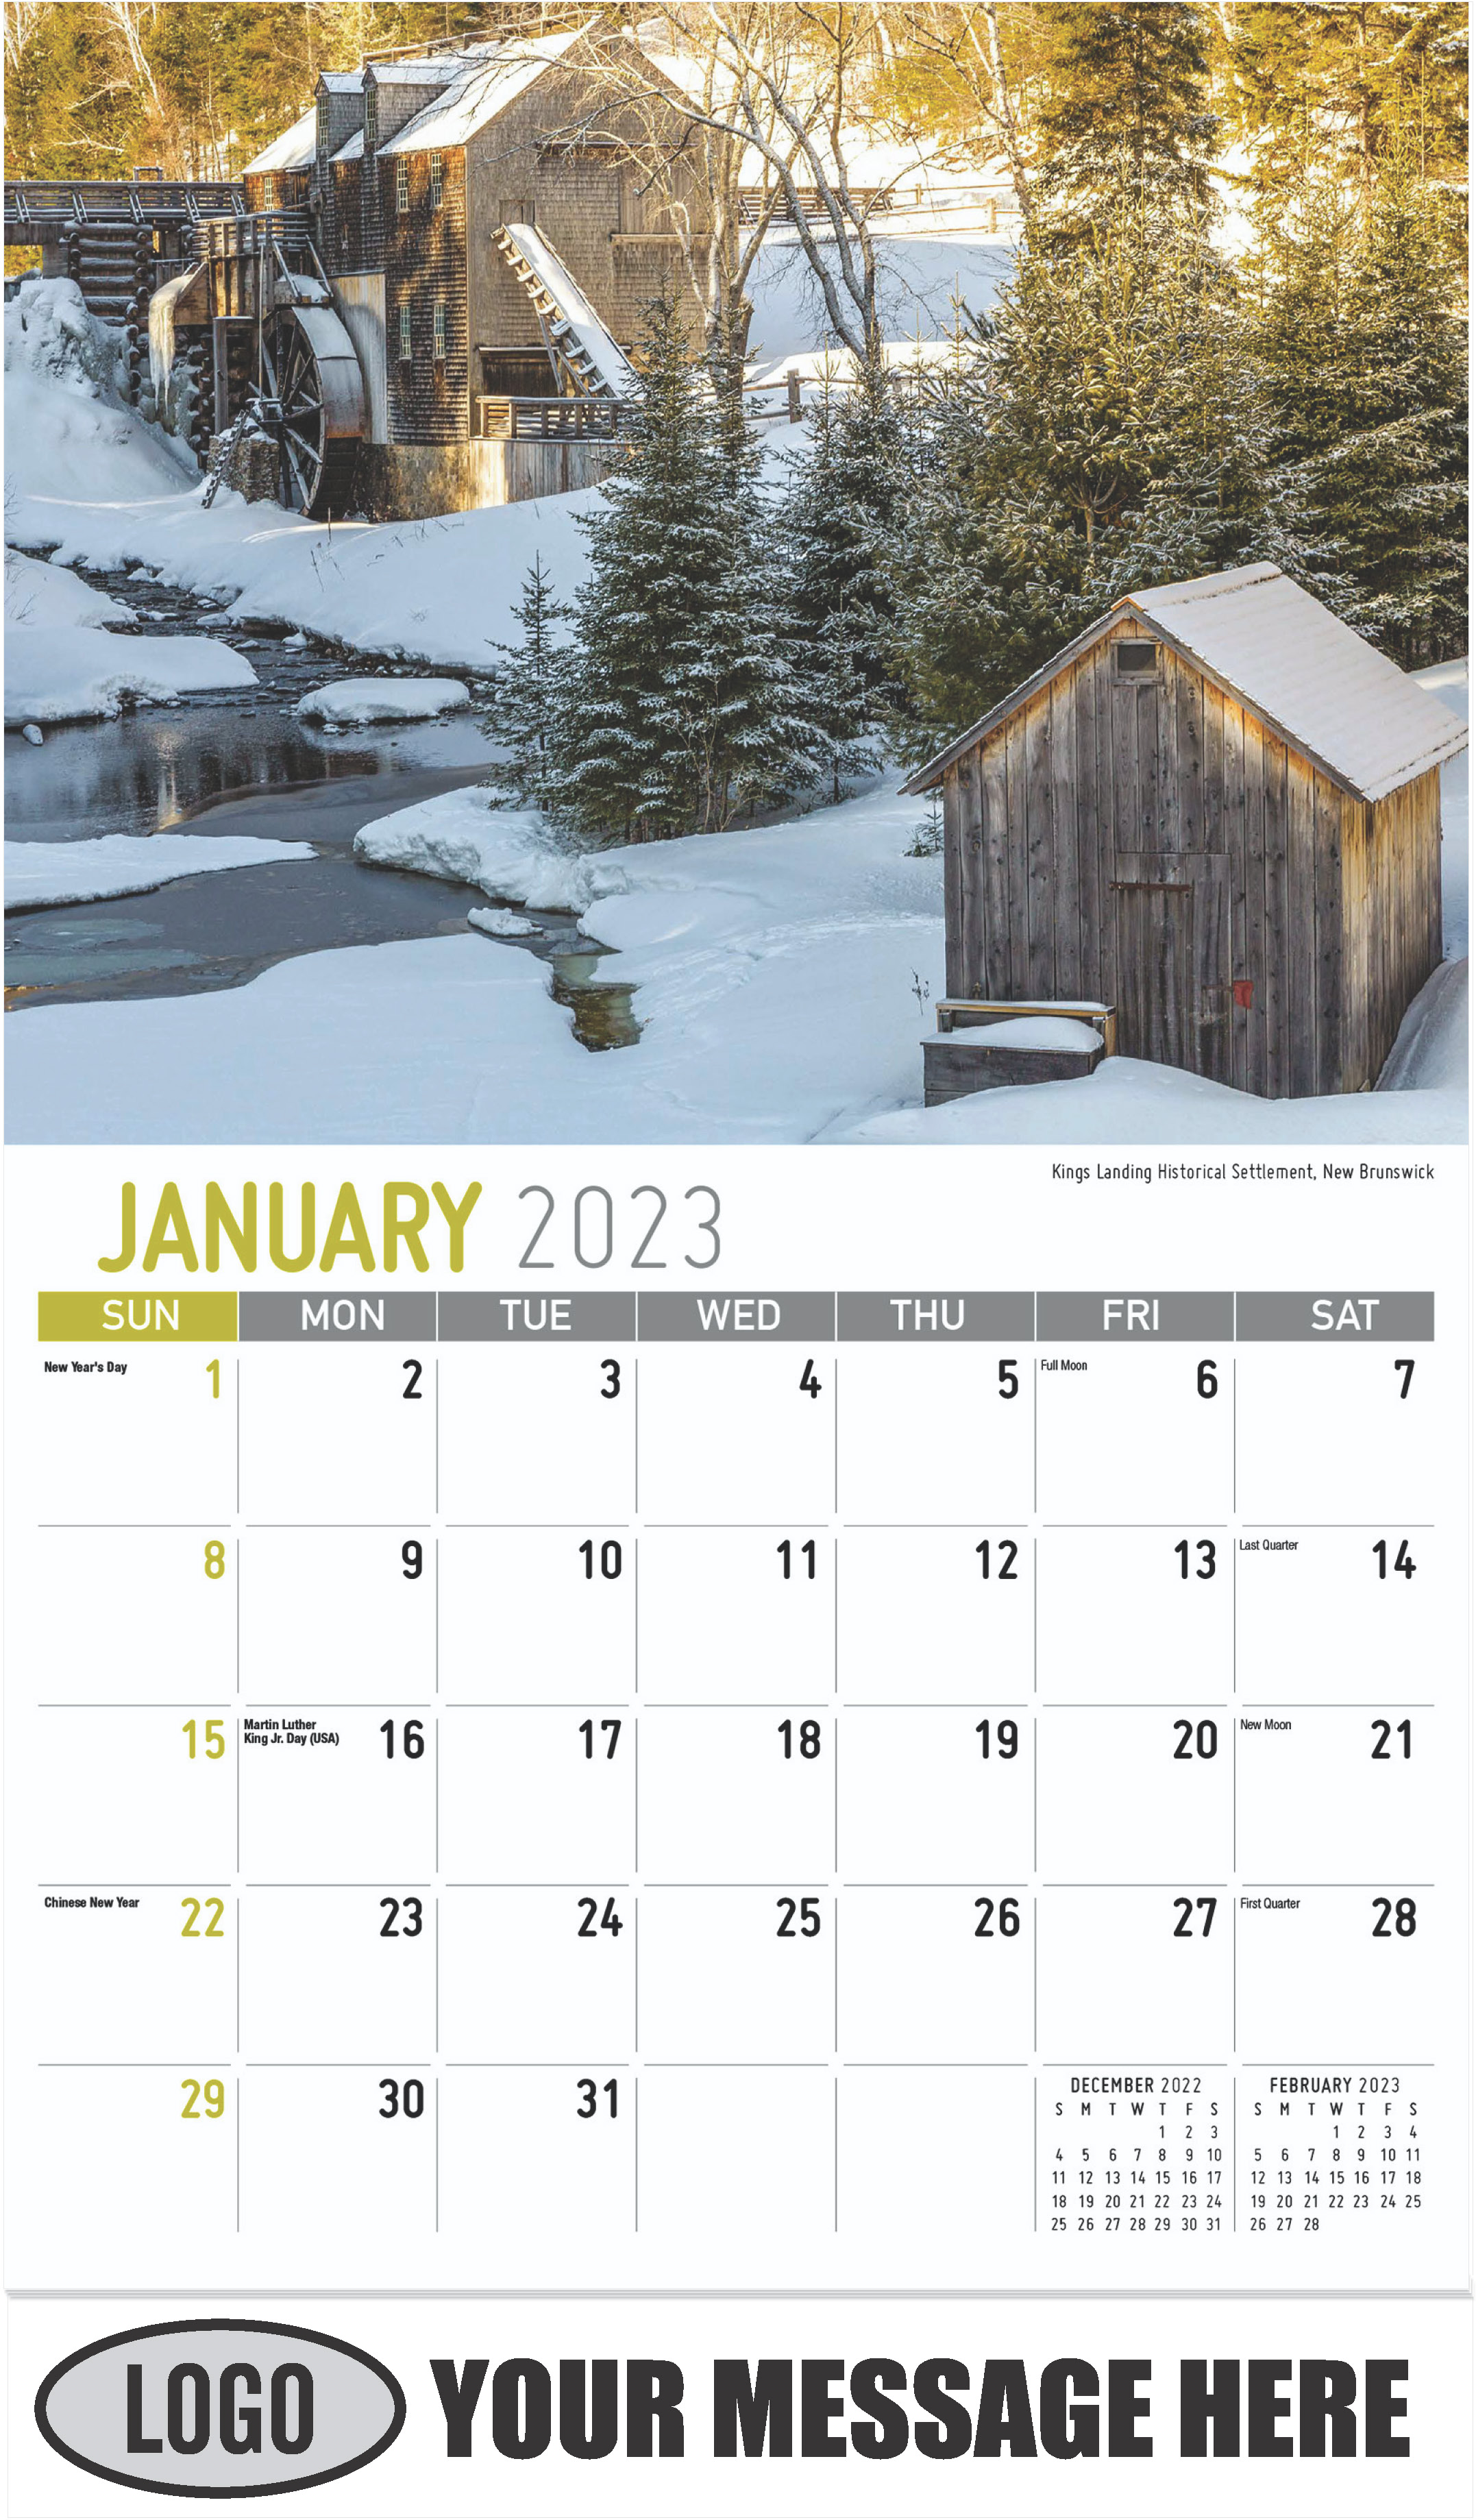 Kings Landing Historical Settlement, New Brunswick - January - Atlantic Canada 2023 Promotional Calendar